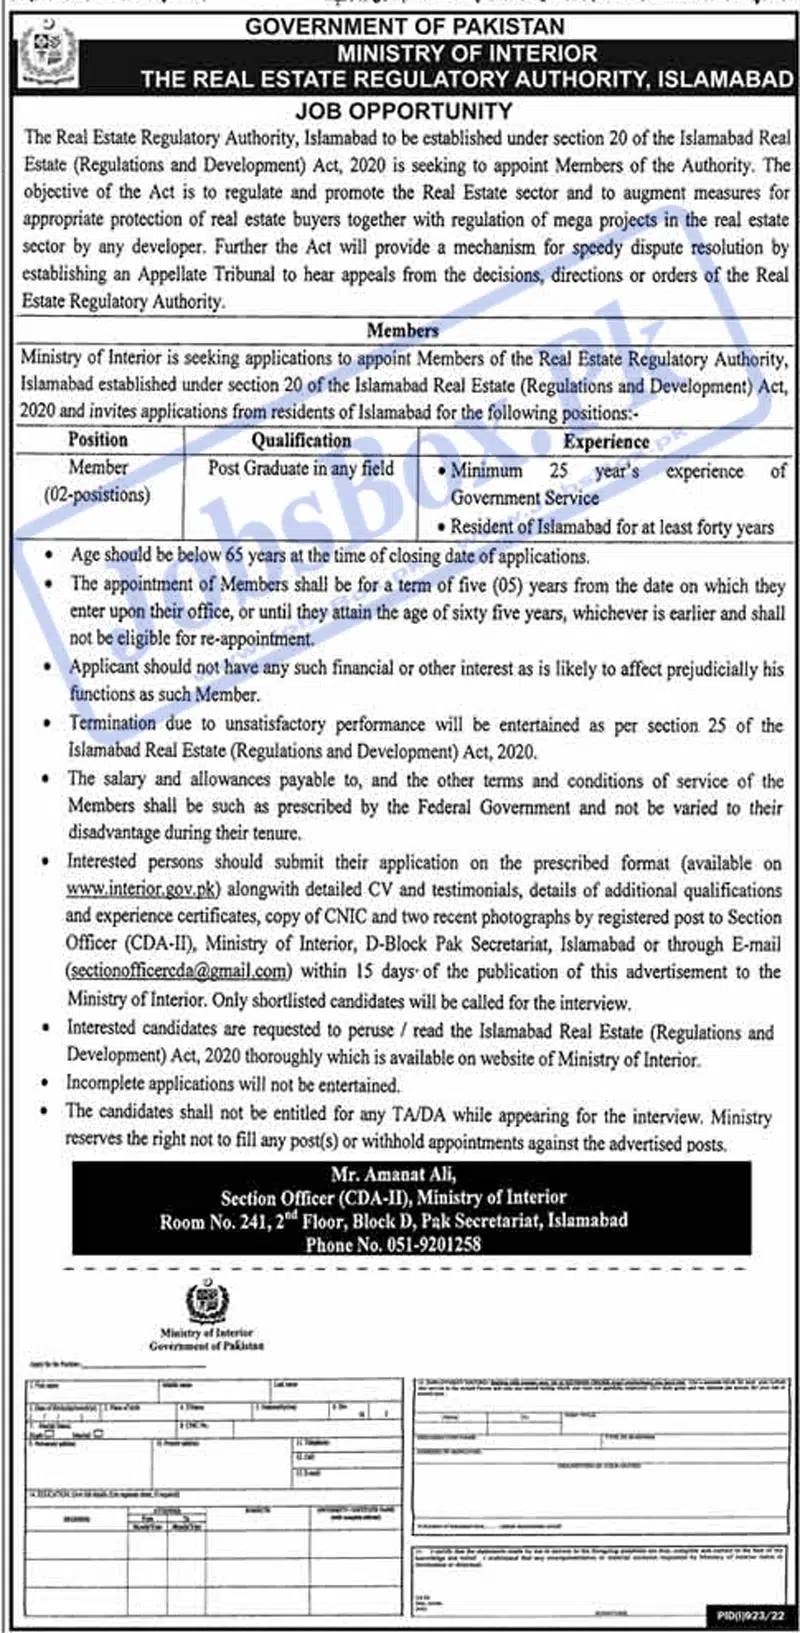 New Ministry of Interior Jobs 2022 - Application Form www.interior.gov.pk